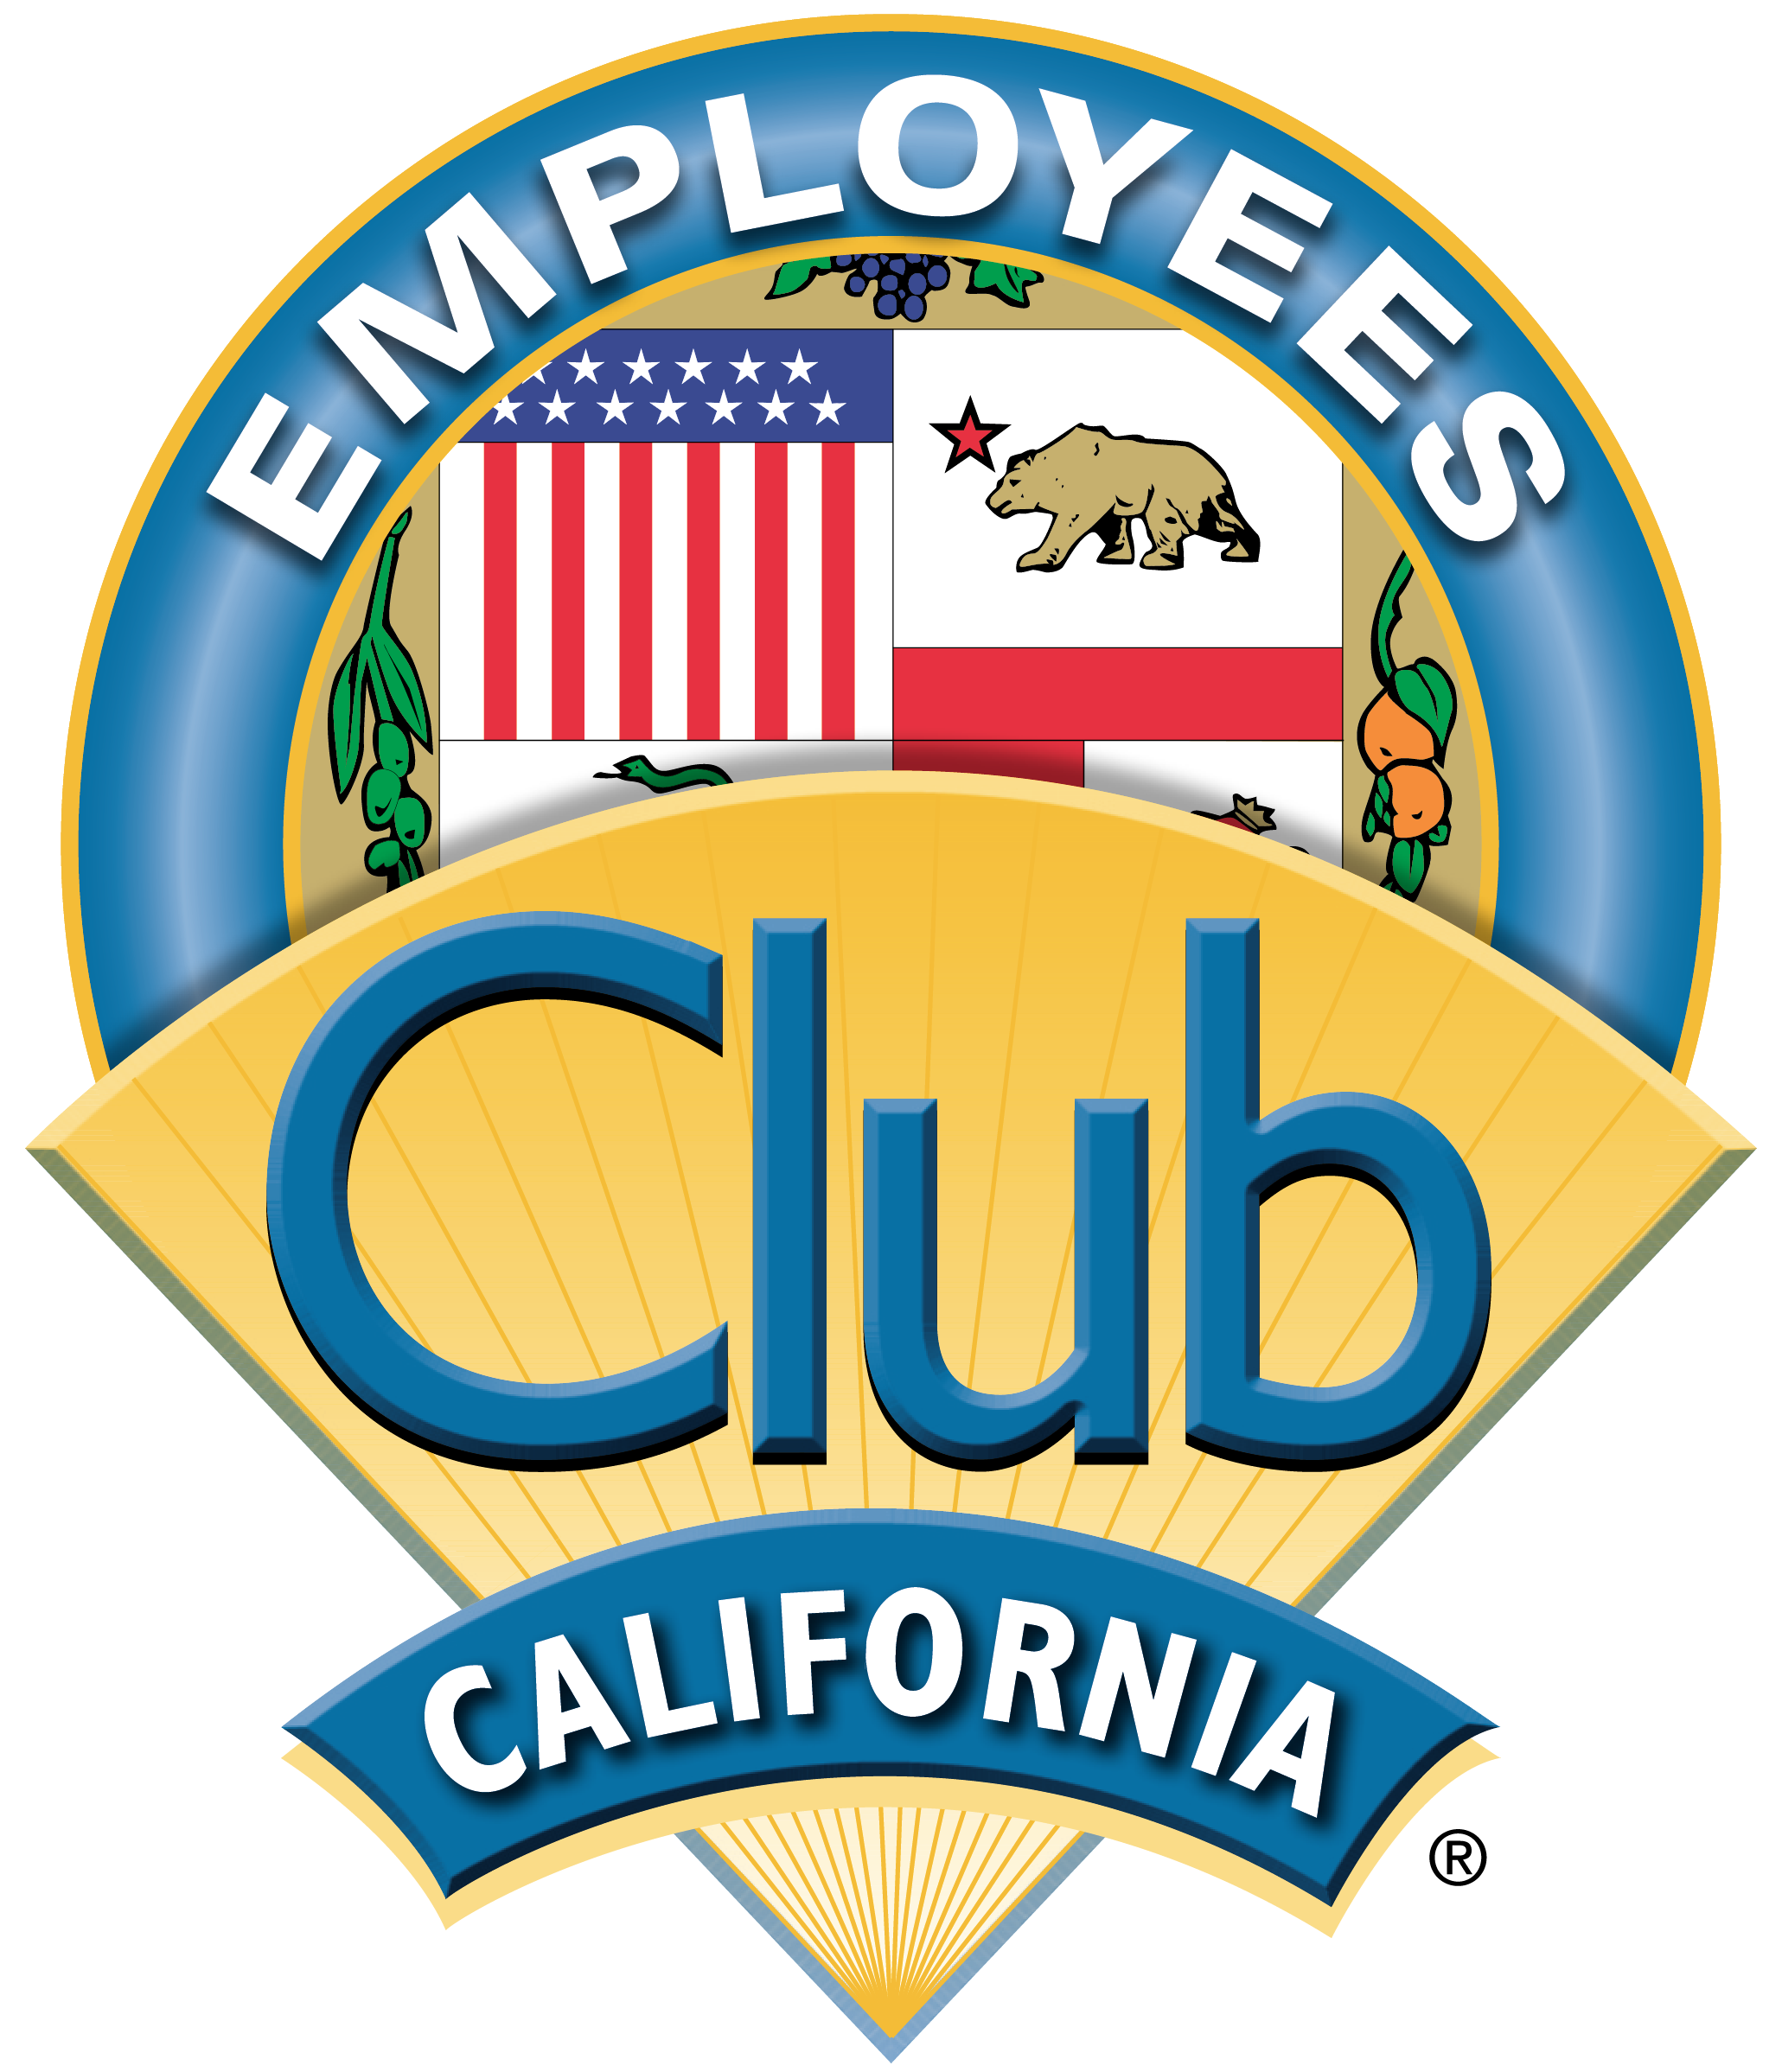 Employees Club California Logo